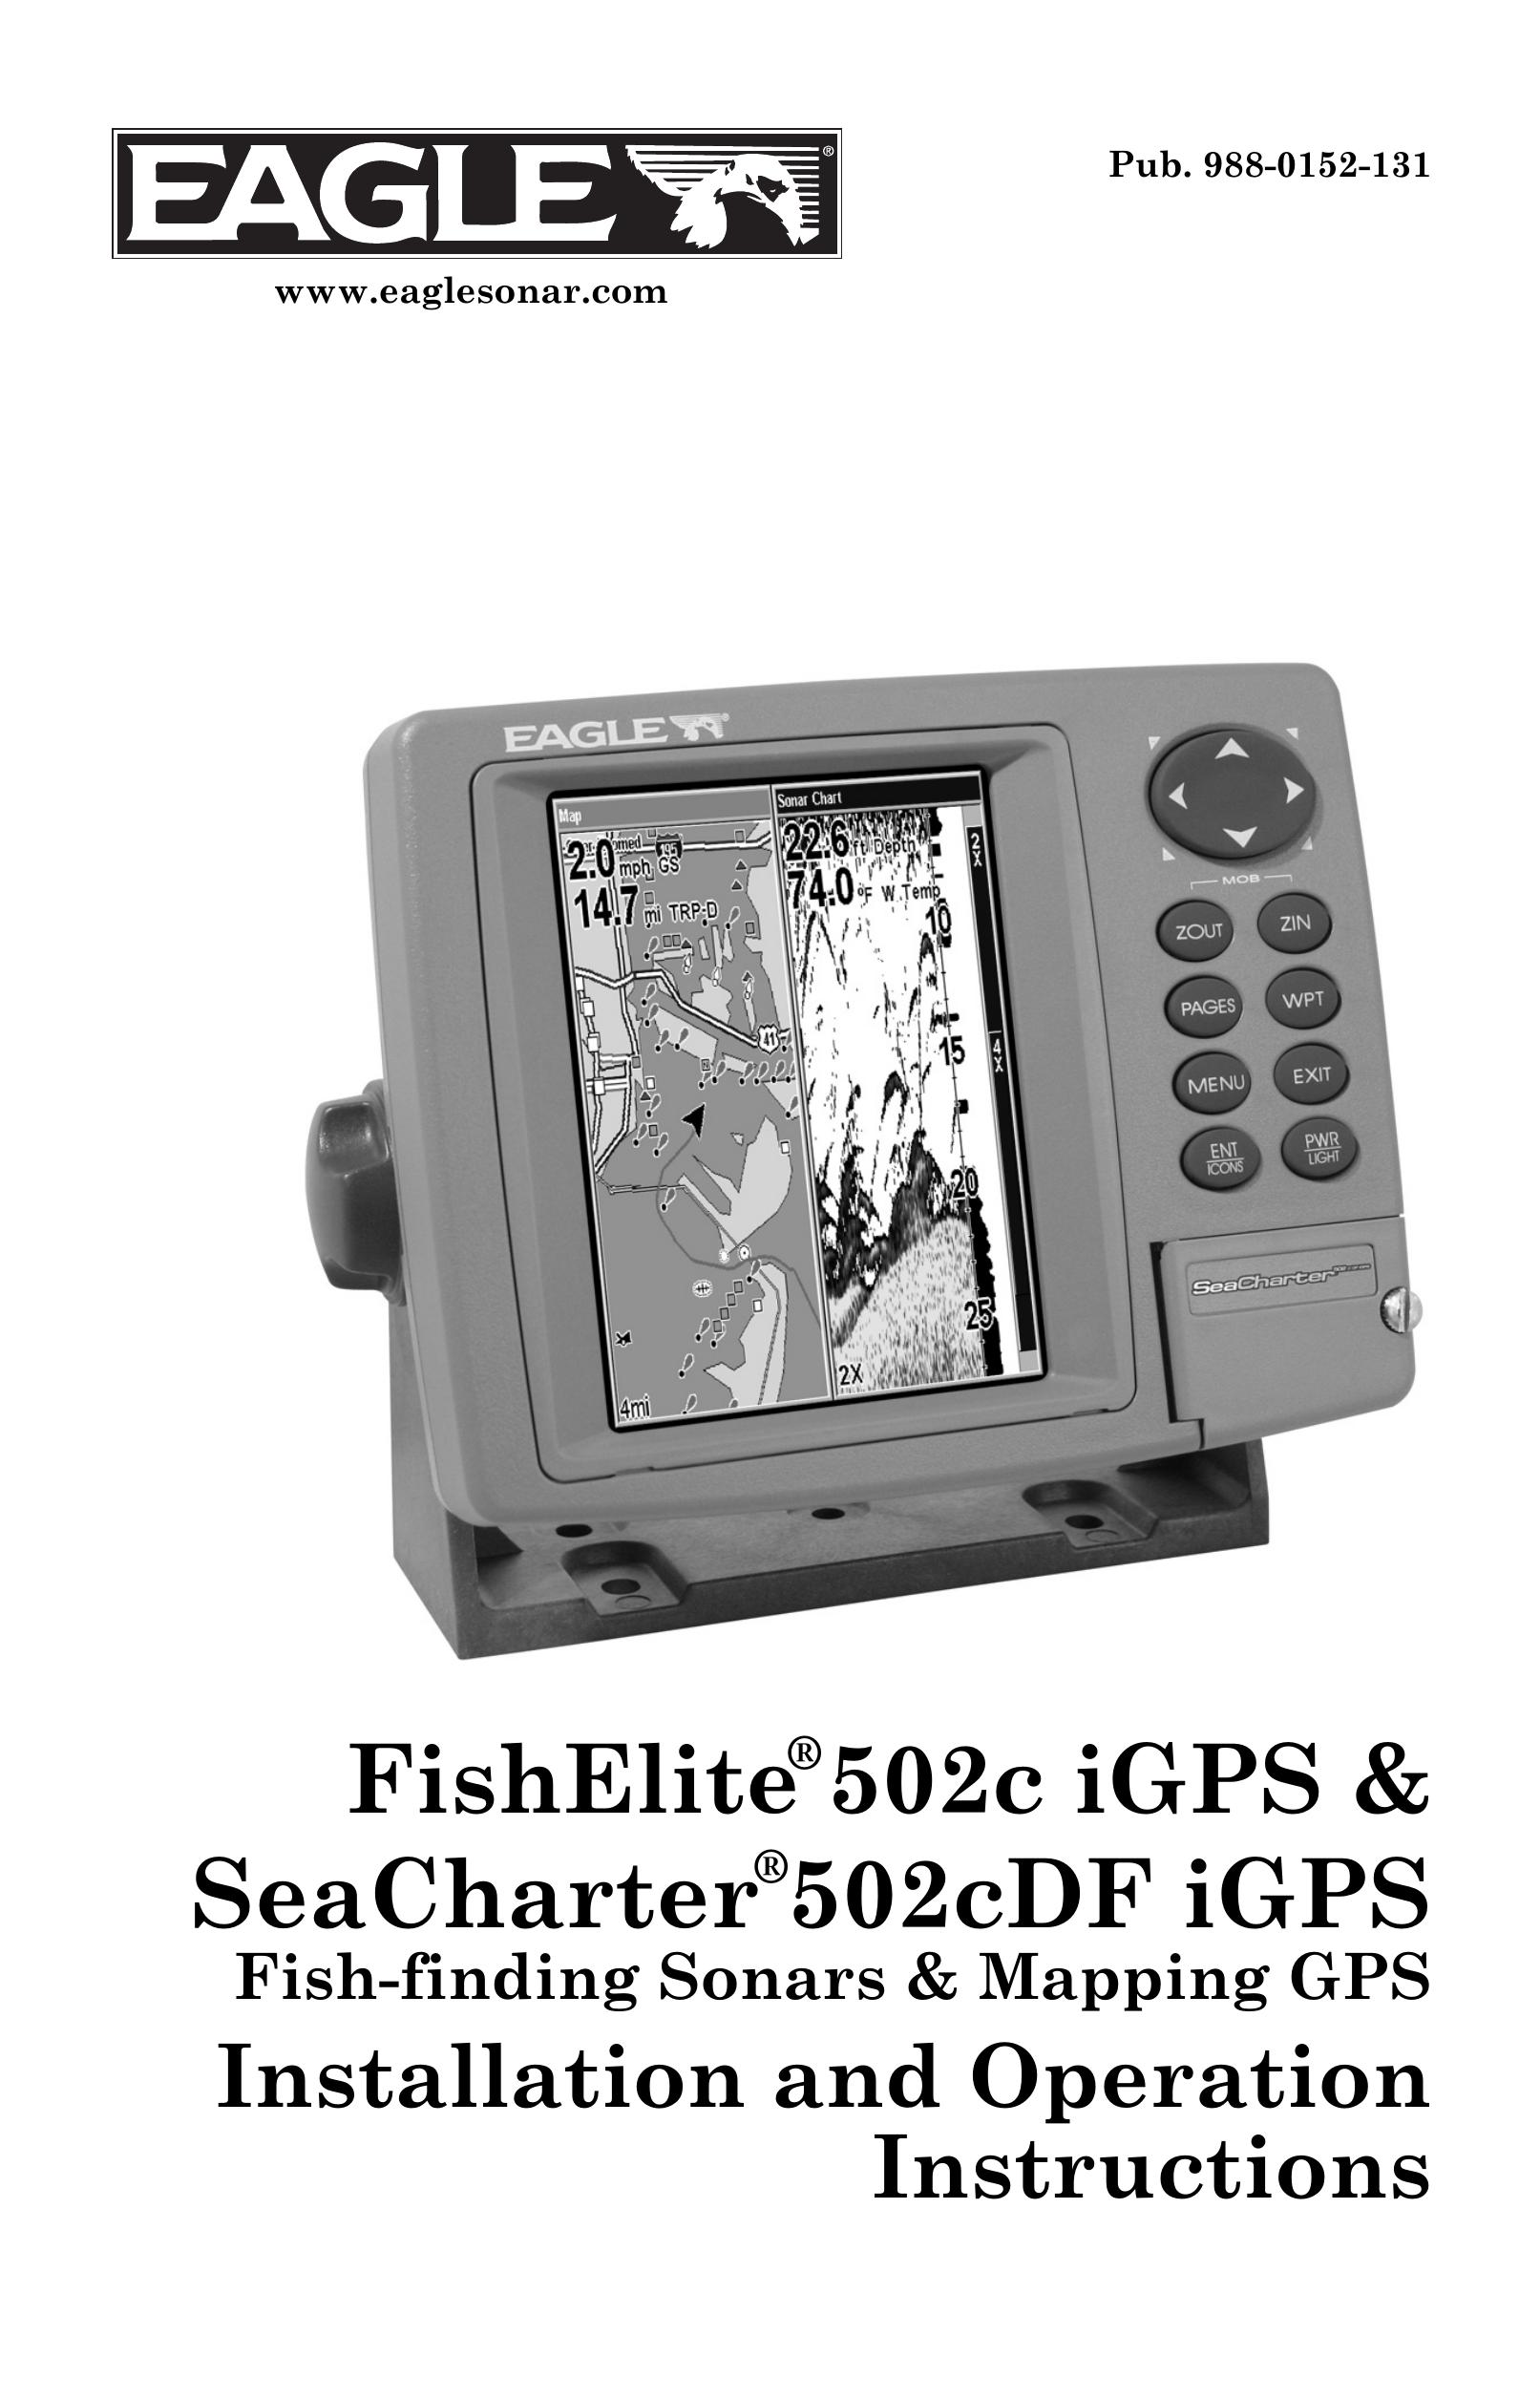 Eagle Electronics 502cDF Fish Finder User Manual